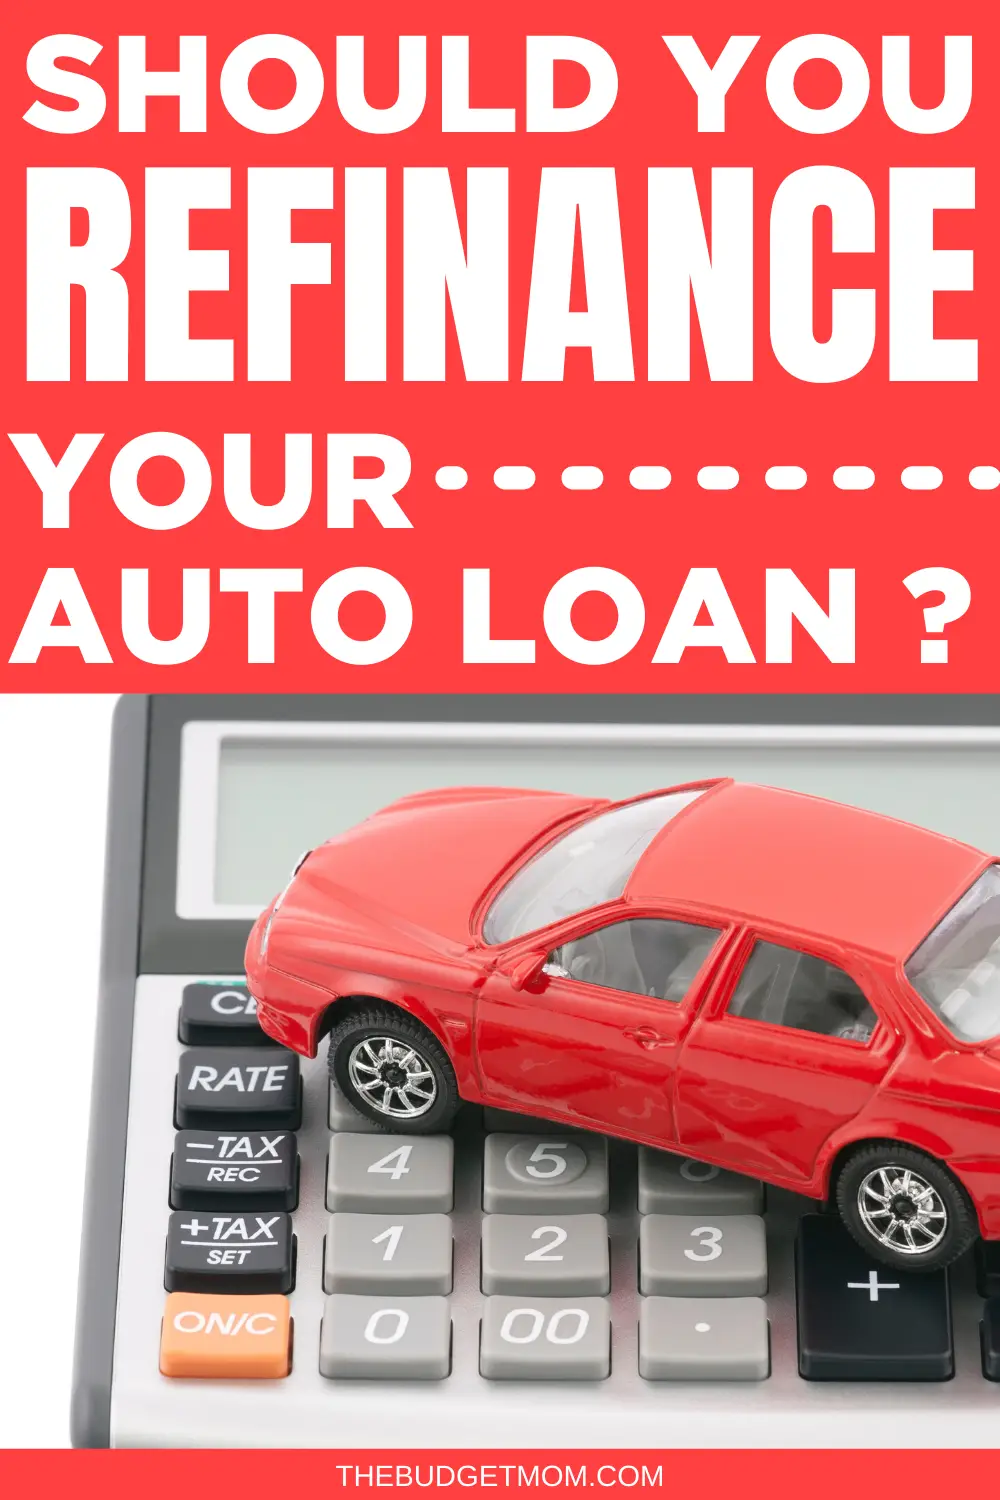 Should You Refinance Your Auto Loan?